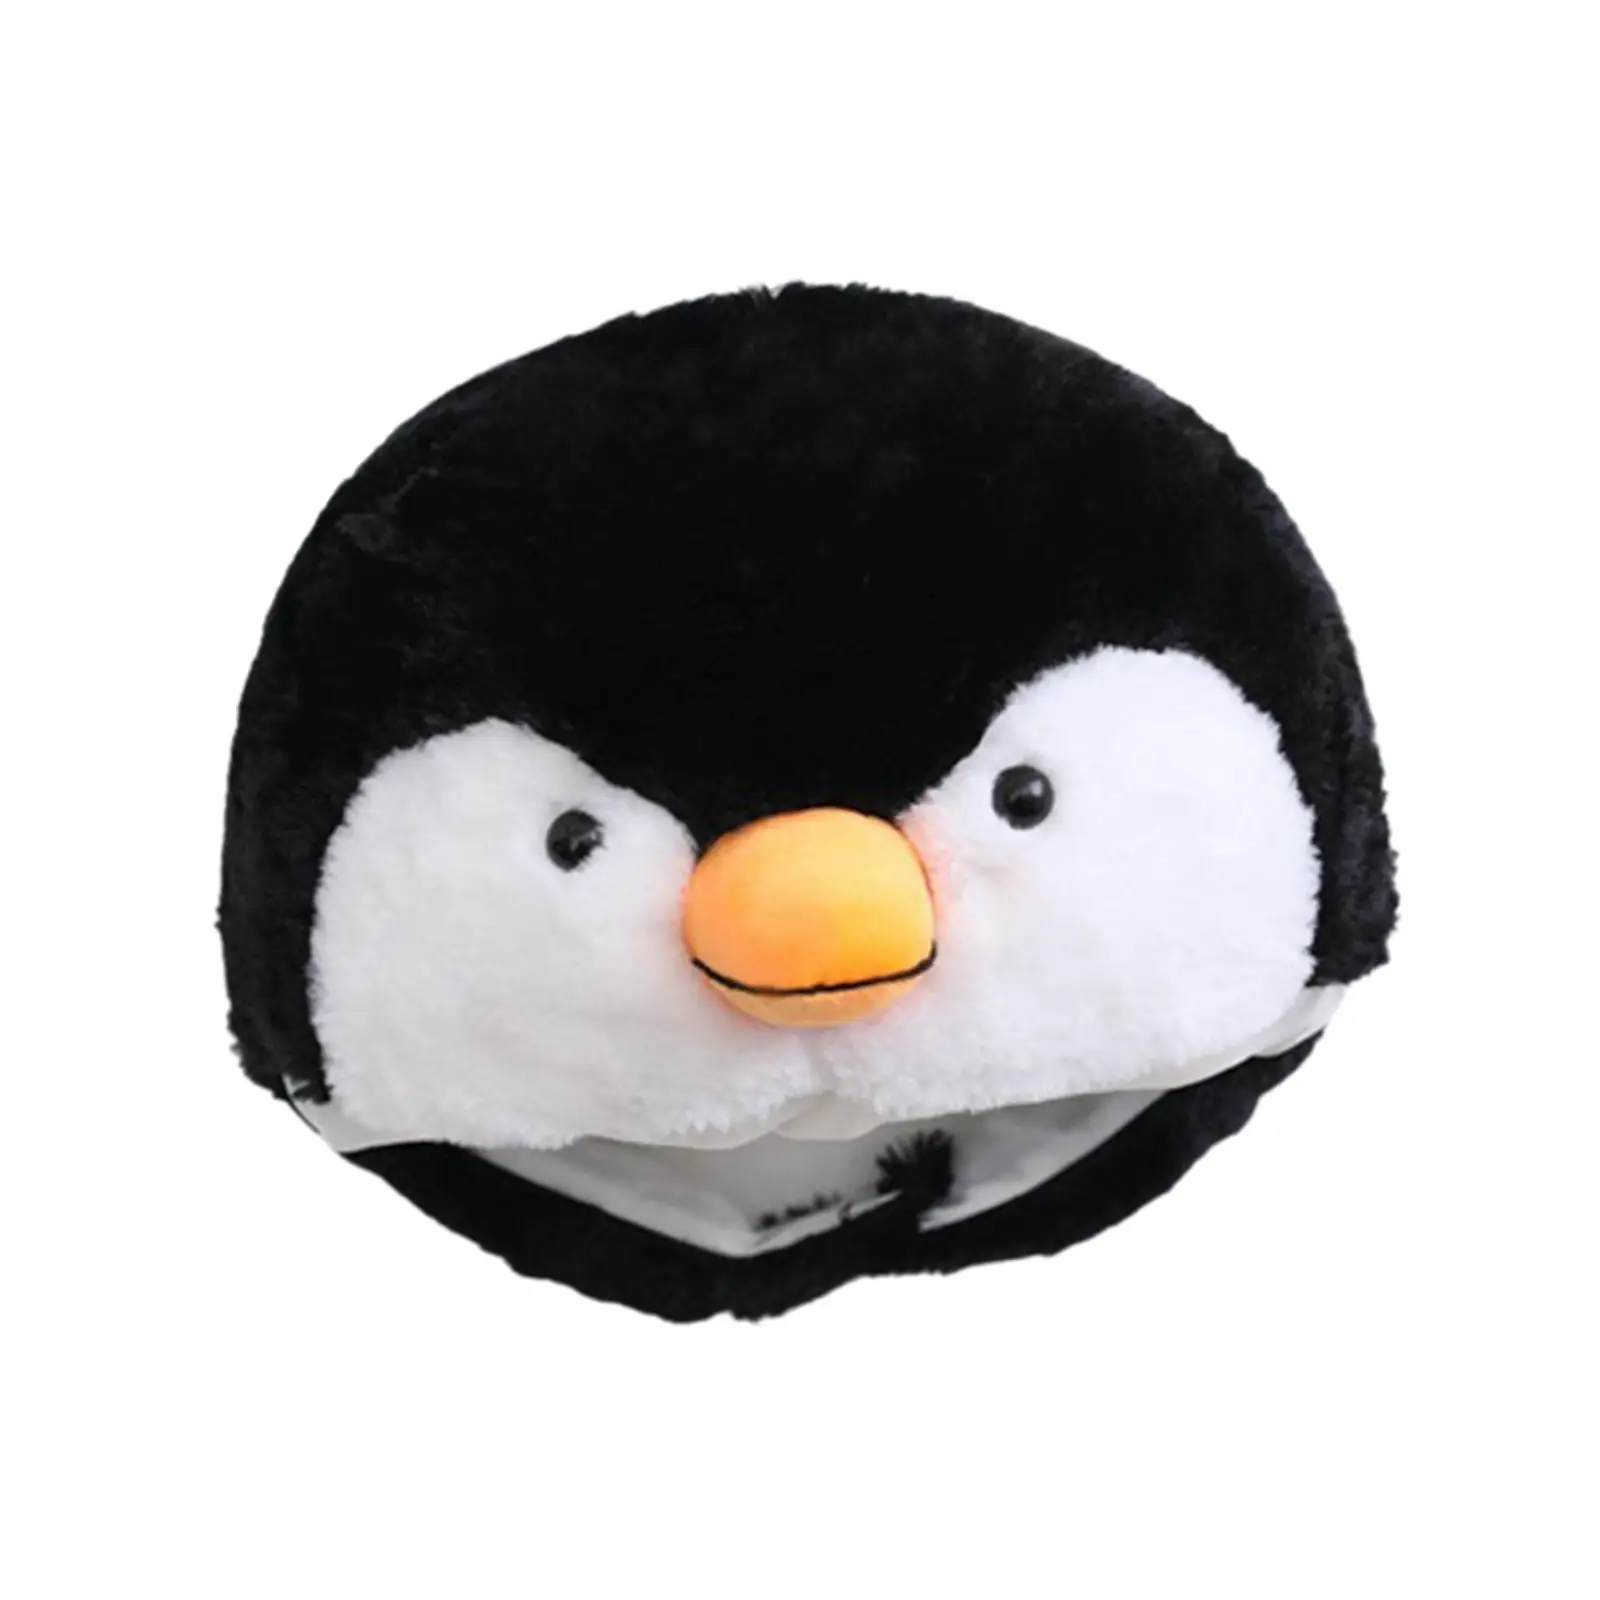 Fashion Penguin Plush Hat Ski Hat Soft Aviator Style for Christmas Adults